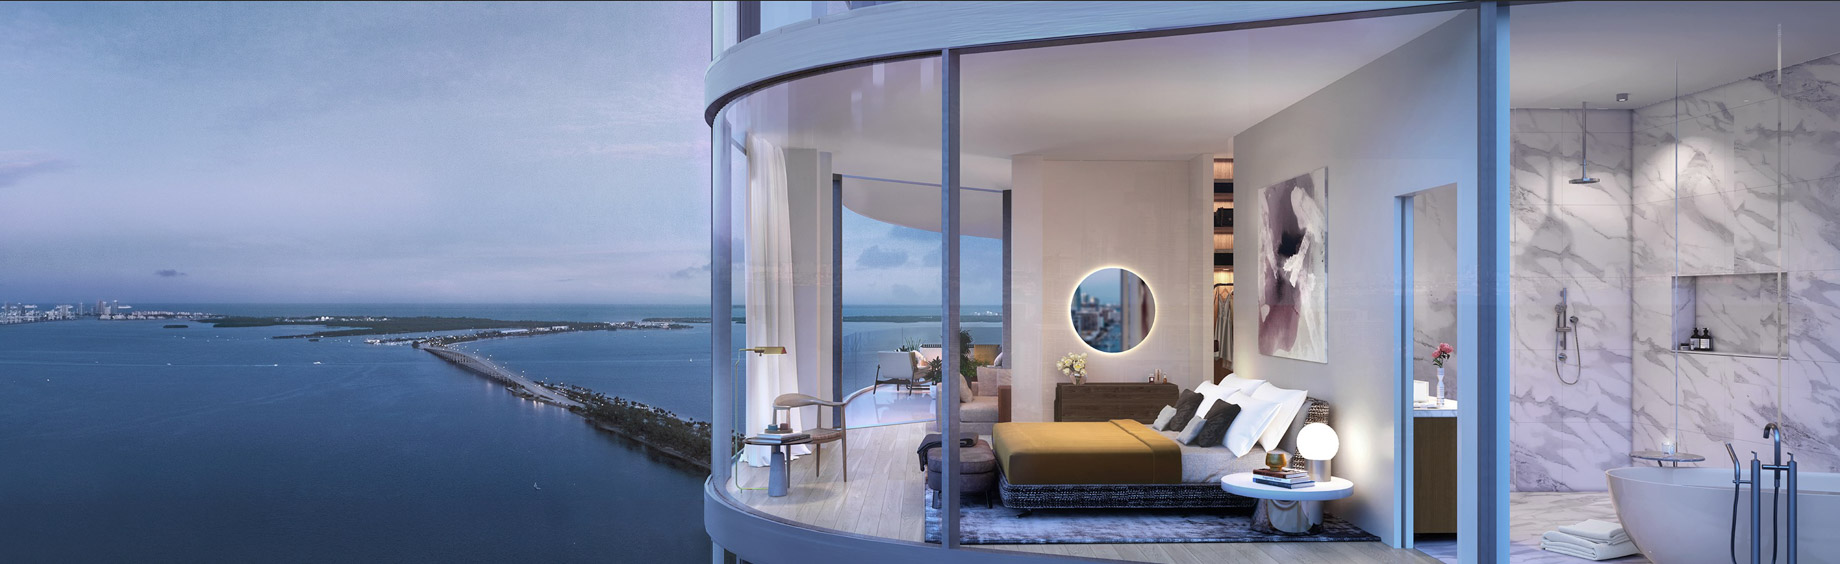 Luxury Condo View - UNA Residences - Brickell, Miami